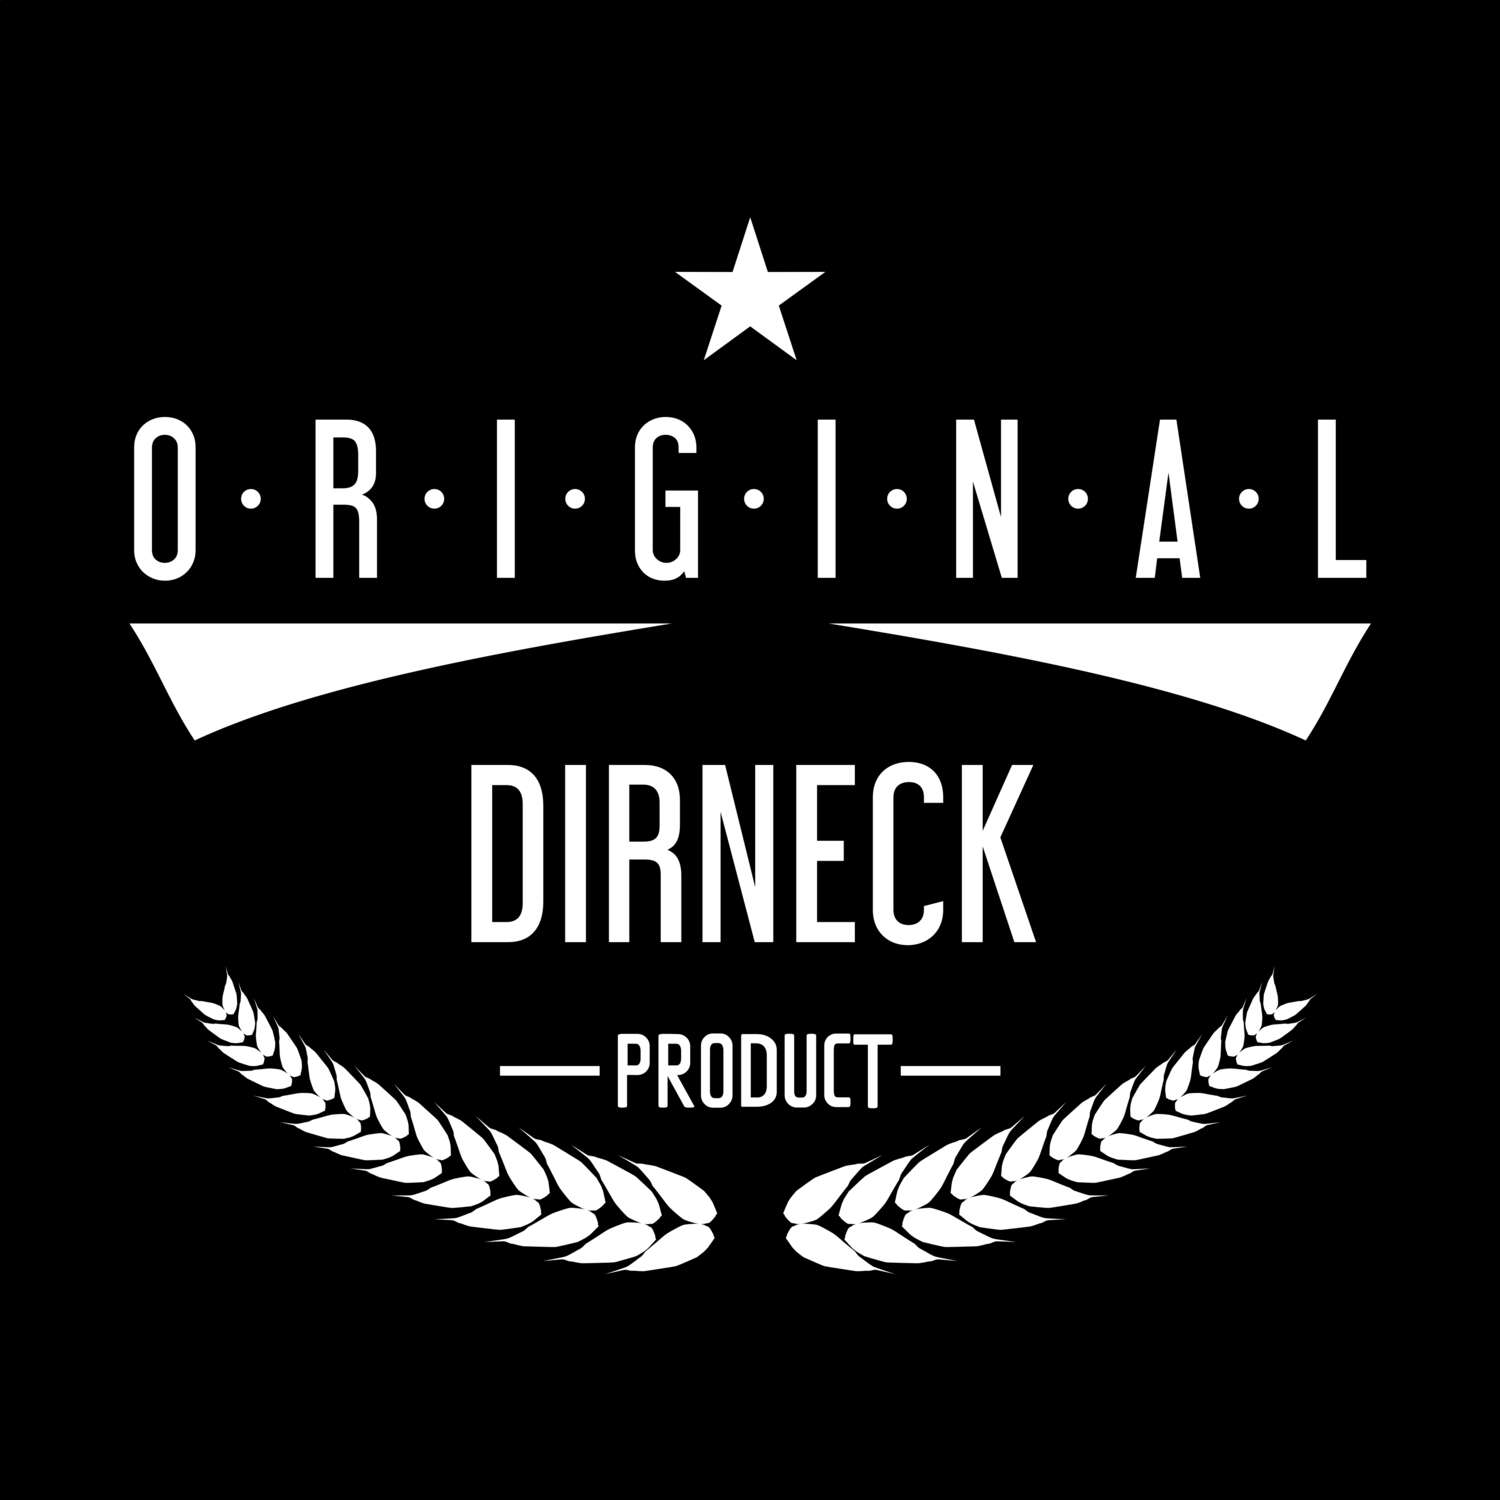 Dirneck T-Shirt »Original Product«